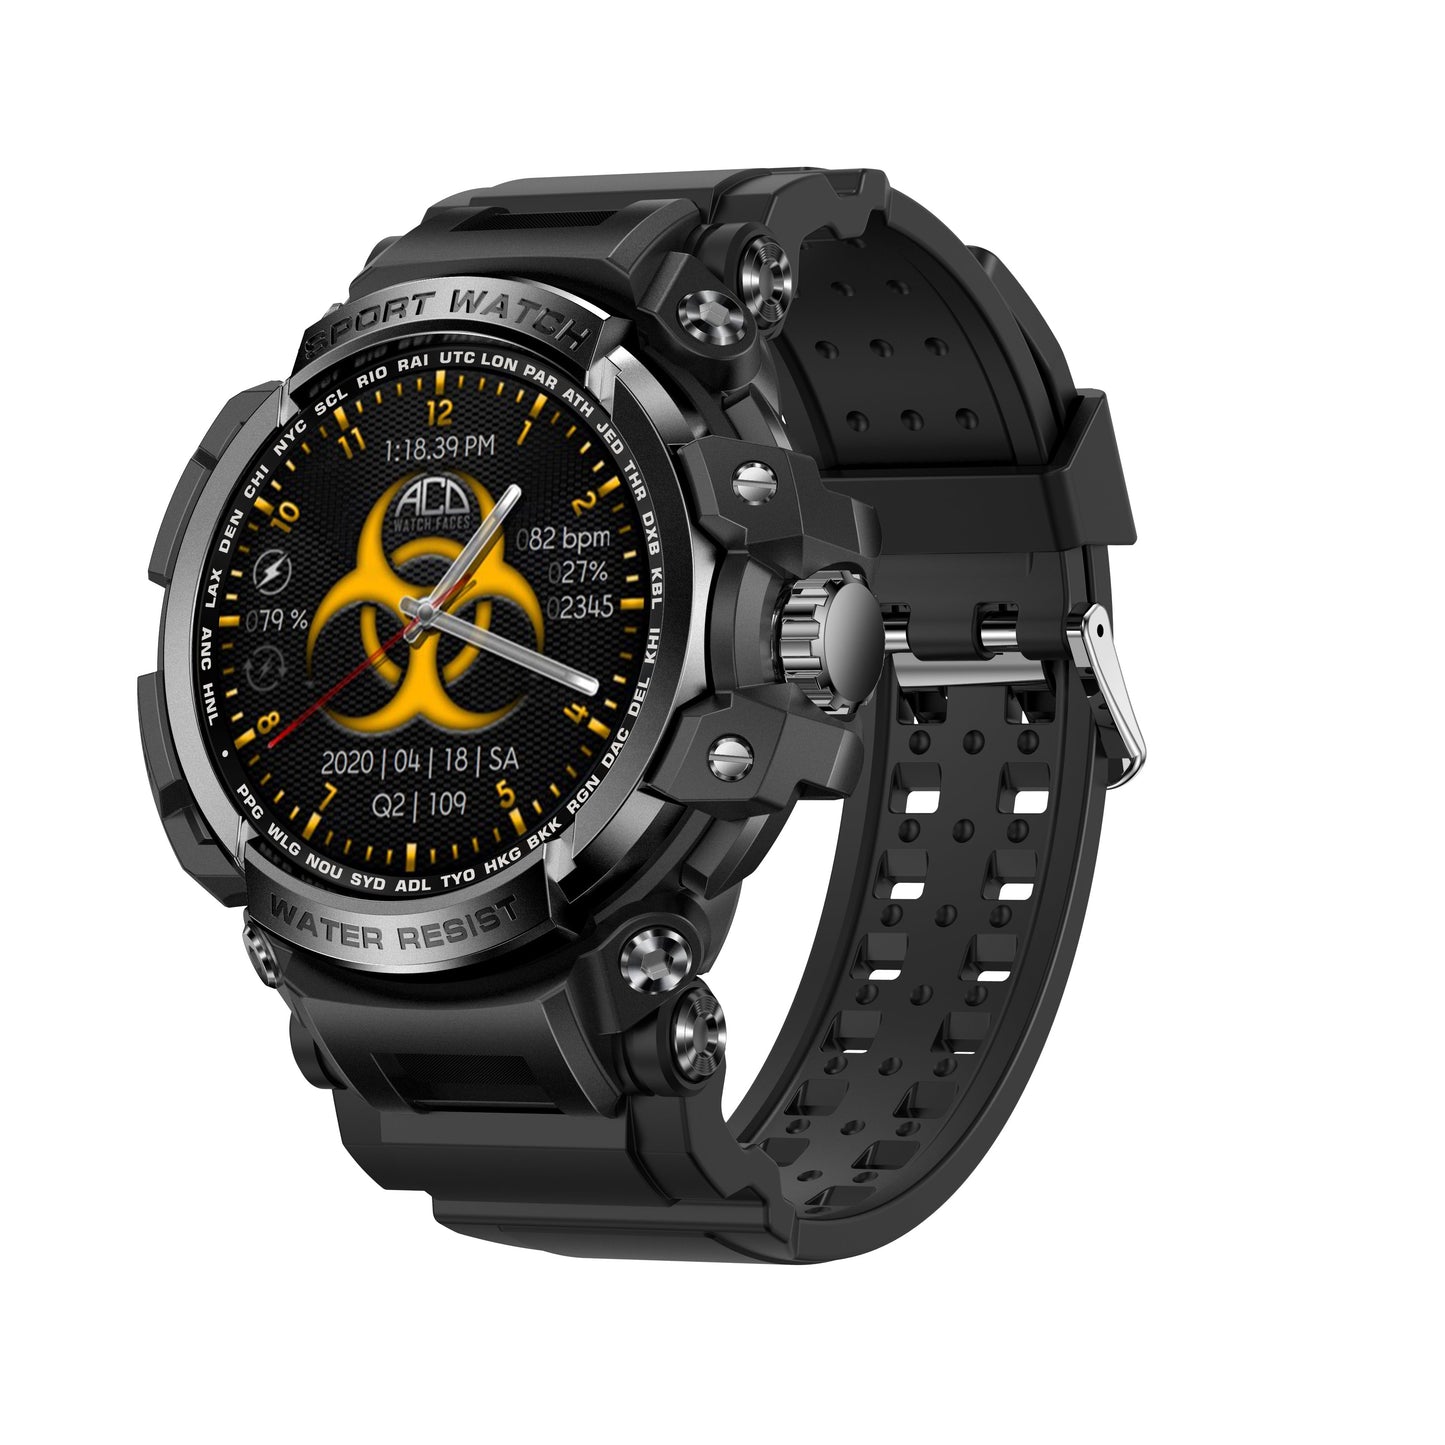 Rugged Warrior - The Indestructible Smartwatch